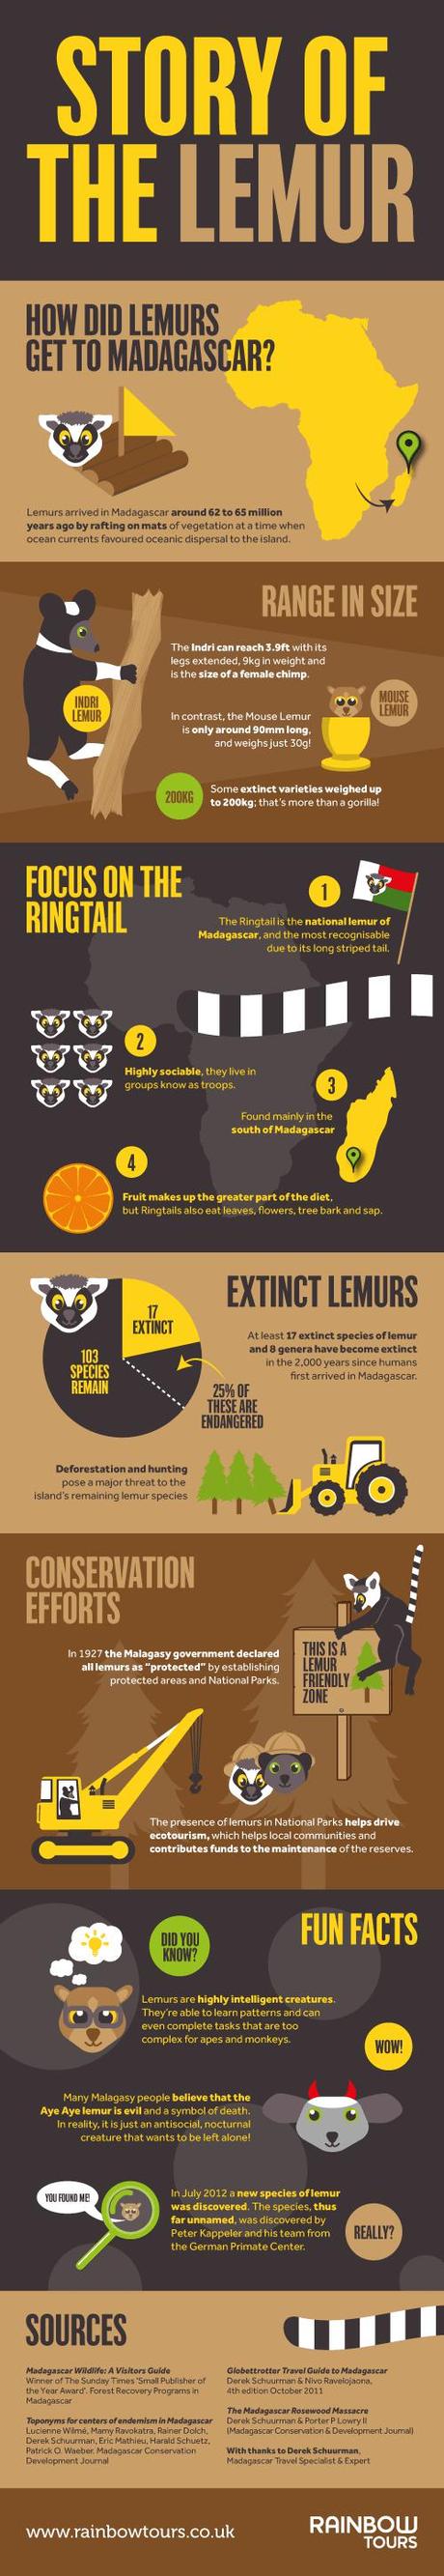 Infographic on Lemurs